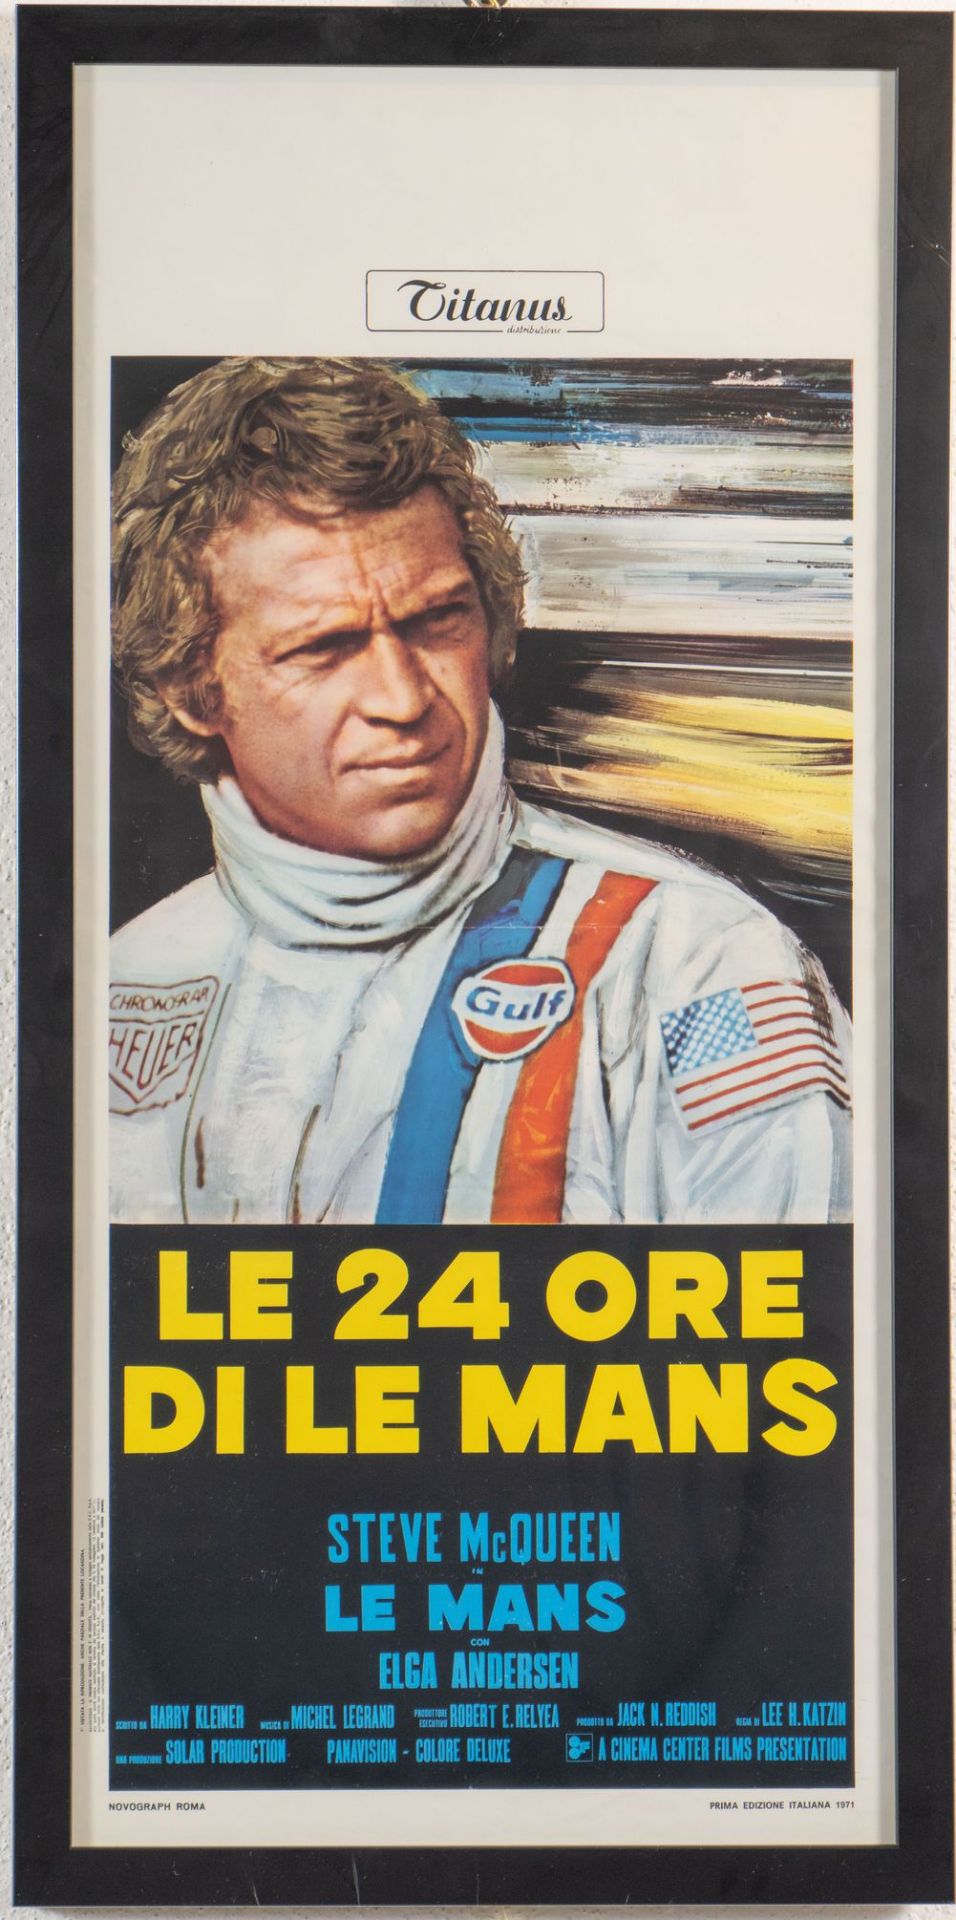 Locandina Film Le Mans			
								
Locandina originale del film â€œLe 24 ore di Le Mansâ€ del 1971,